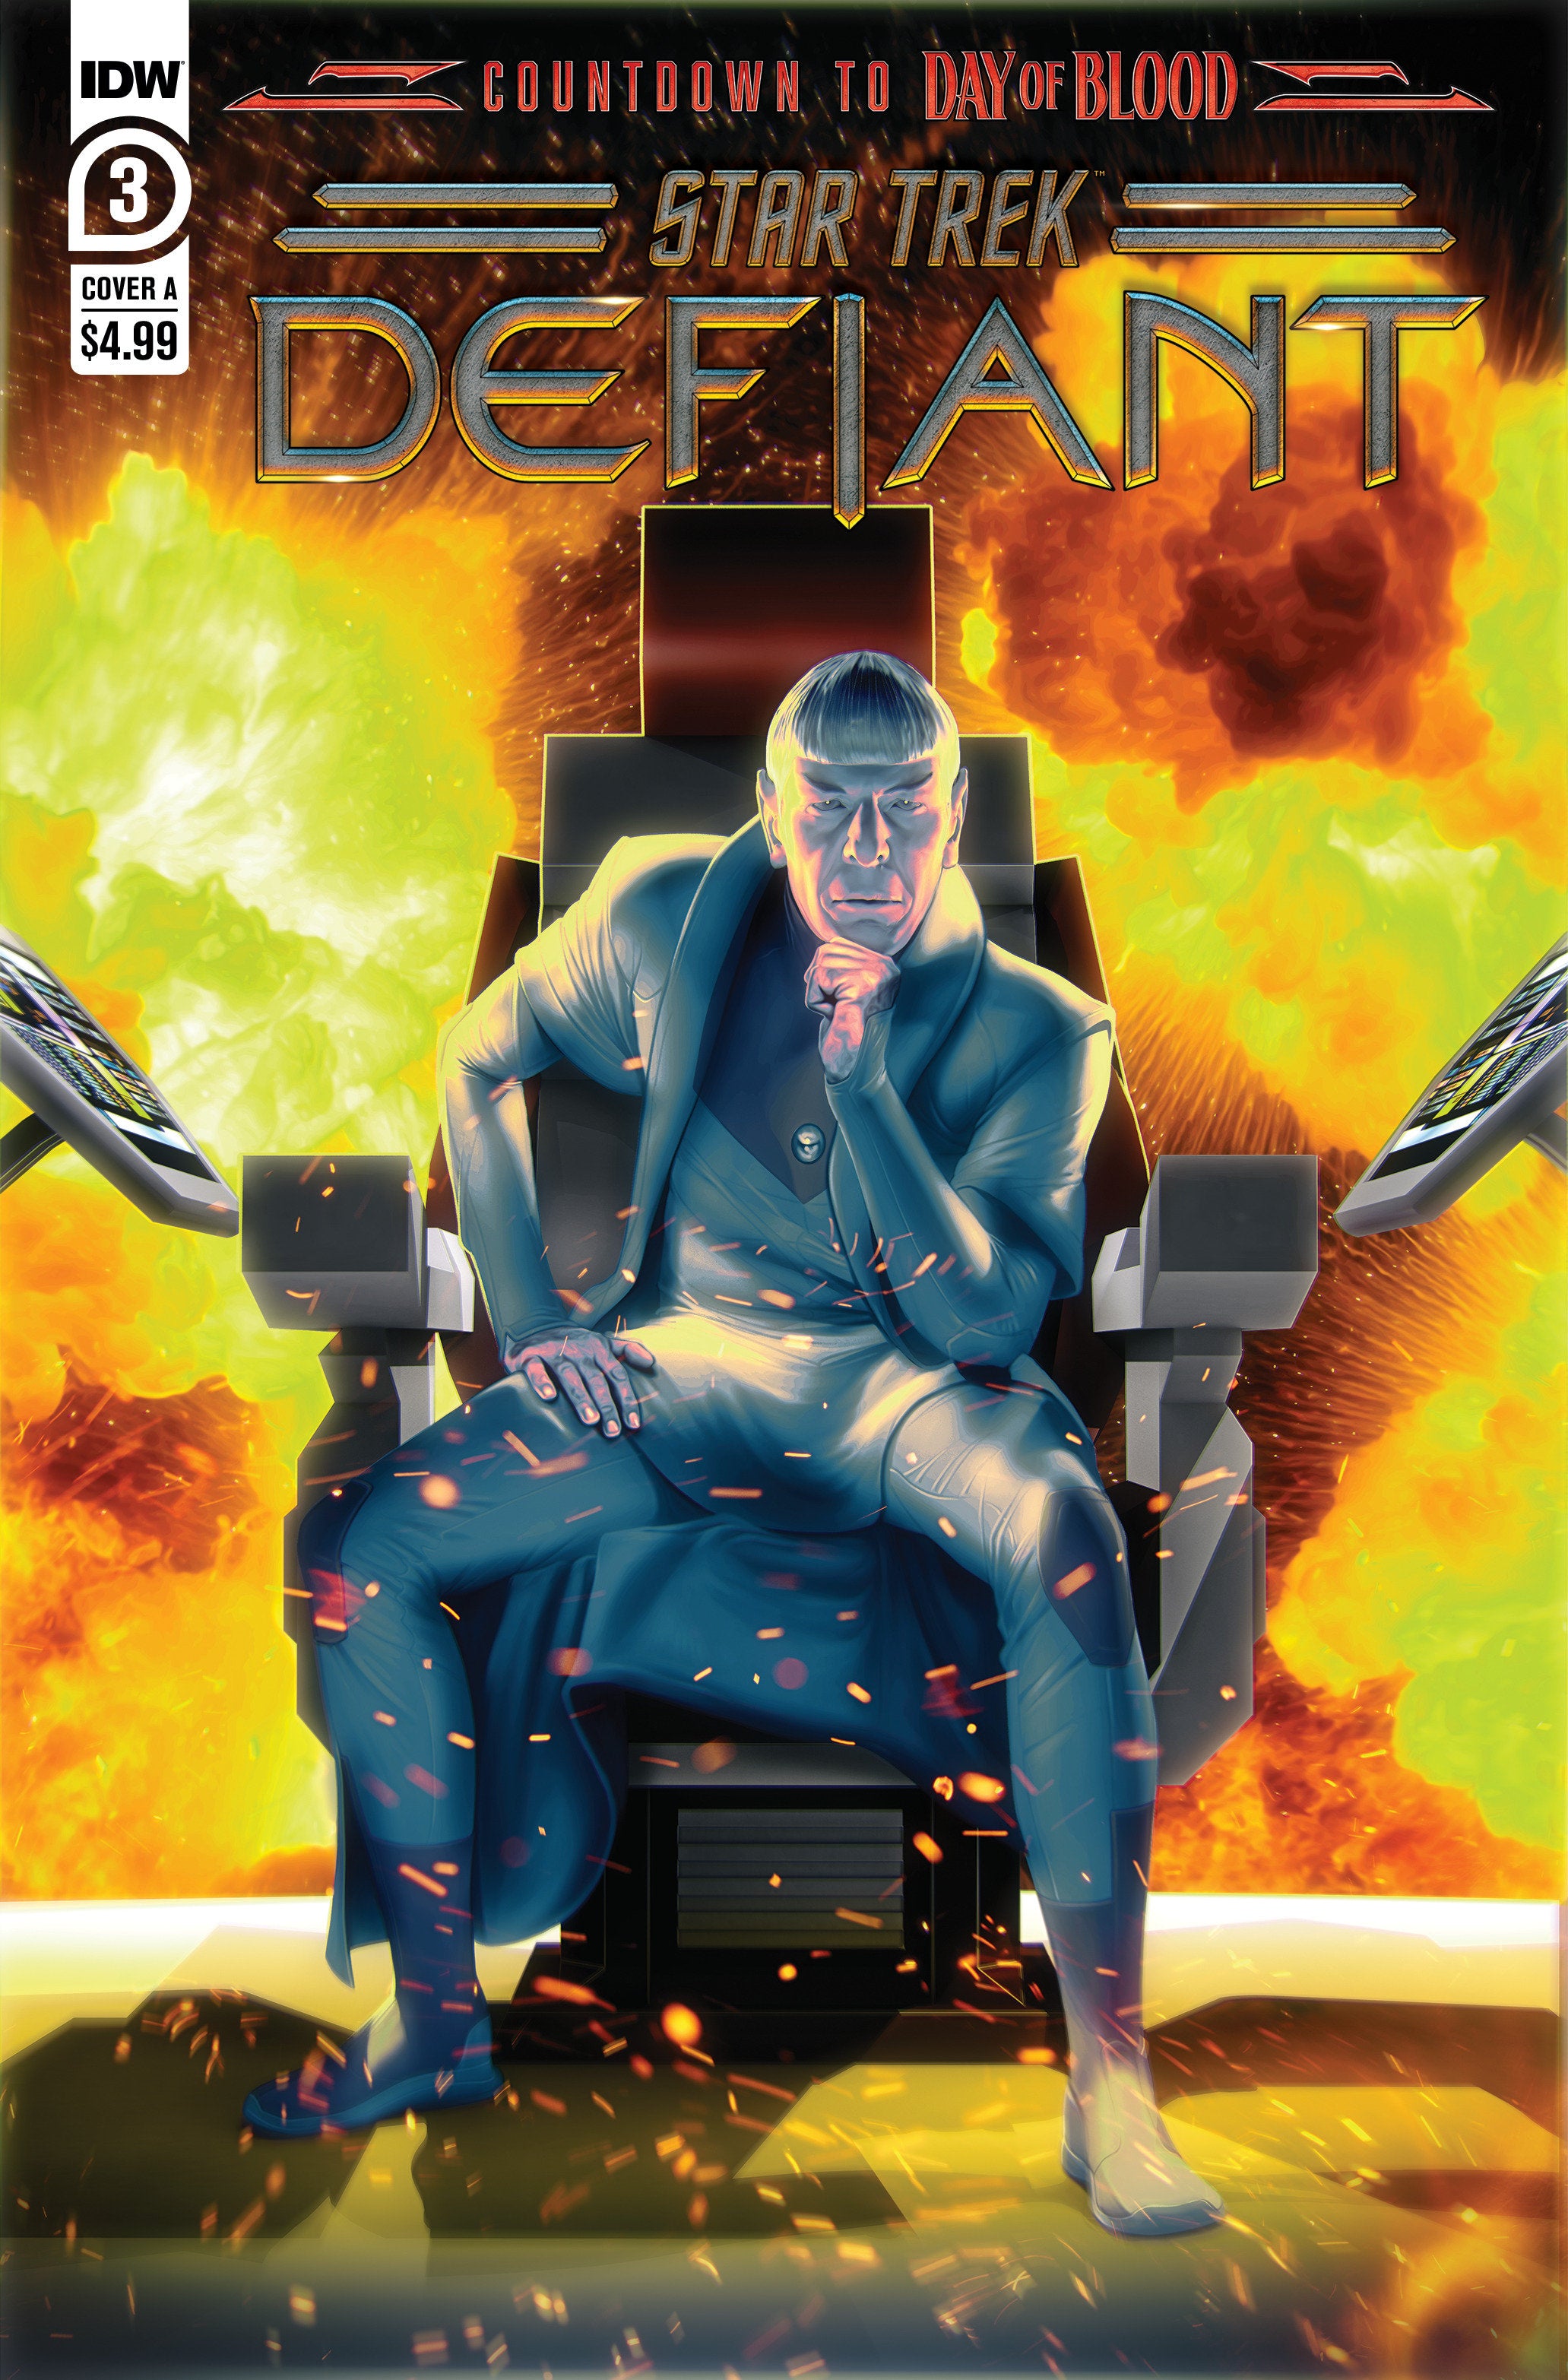 Star Trek: Defiant #3 Cover A (Unzueta) | Game Master's Emporium (The New GME)